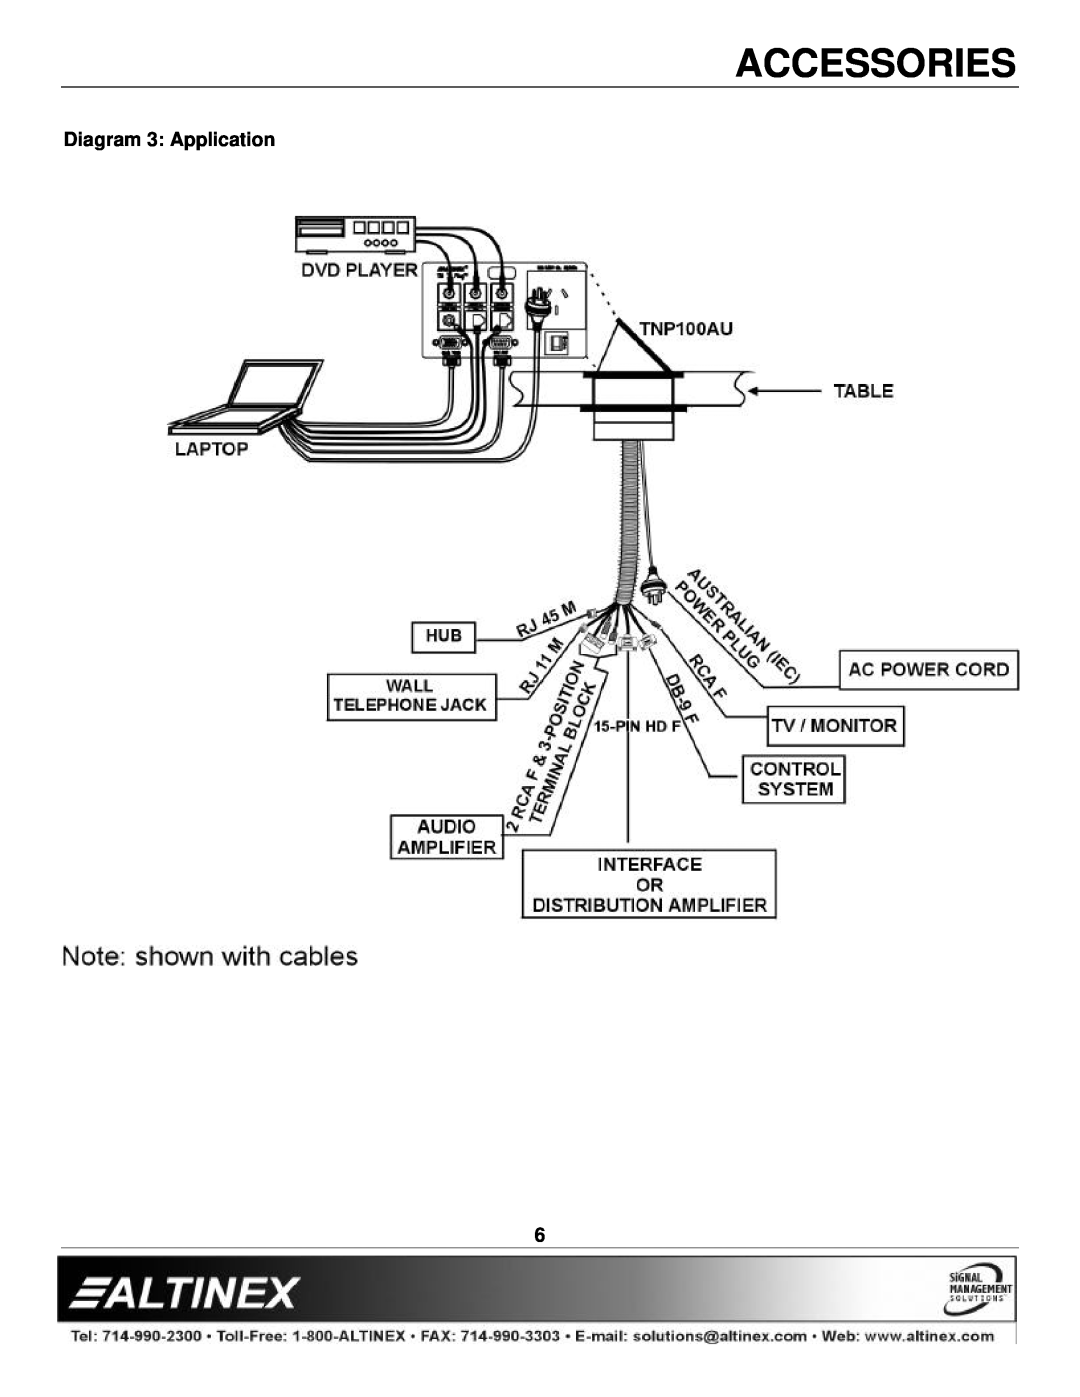 Altinex TNP100AU manual Accessories, Diagram 3 Application 